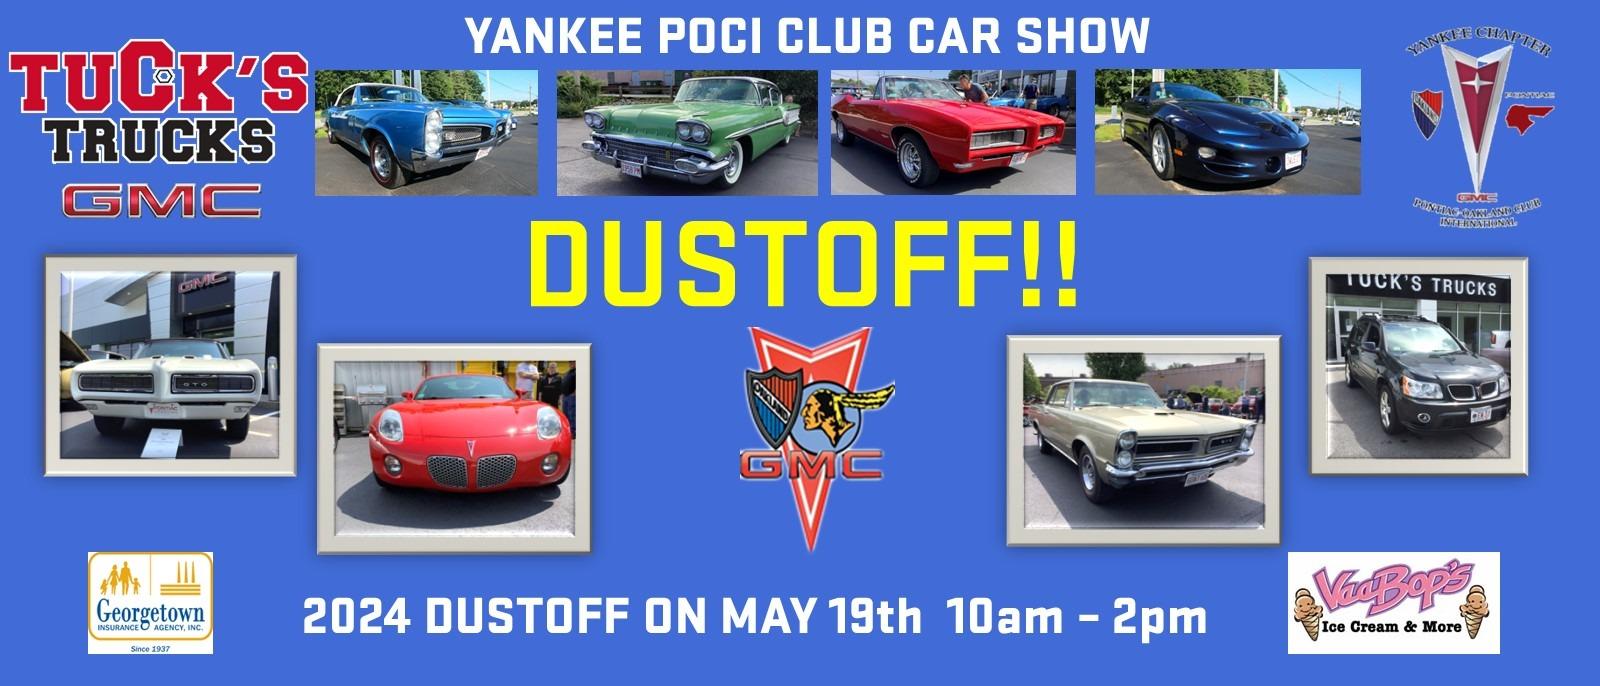 Yankee POCI Club Car Show at Tuck's Trucks GMC May 19th